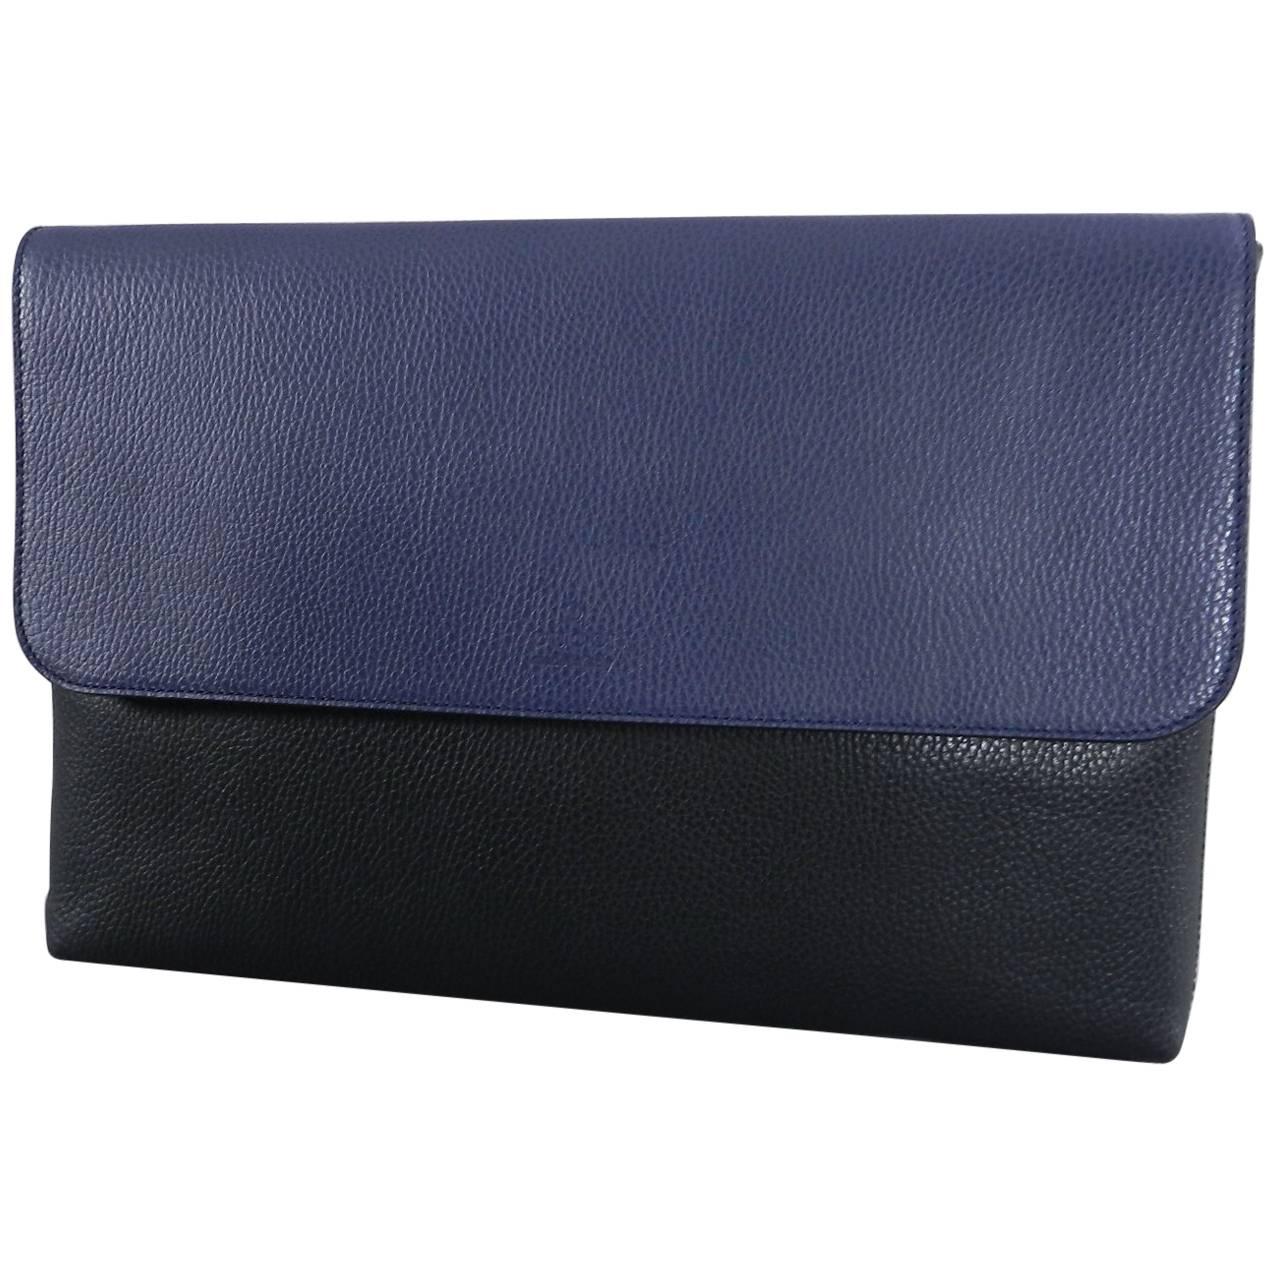 GUCCI Blue and Black Leather Laptop Computer Bag / Portfolio